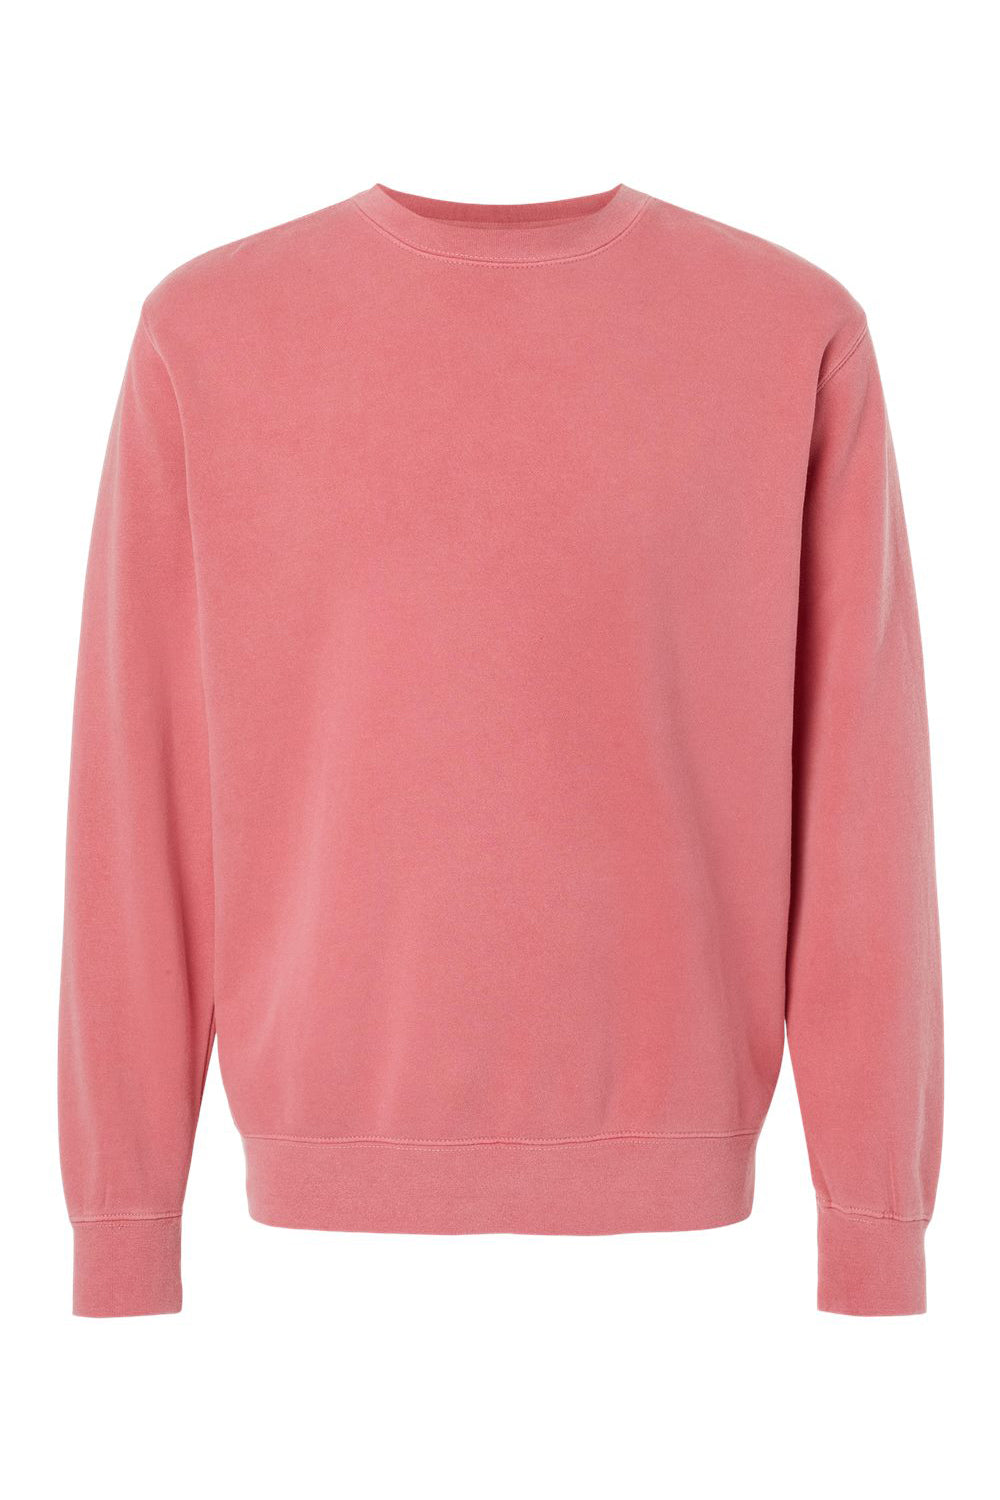 Independent Trading Co. PRM3500 Mens Pigment Dyed Crewneck Sweatshirt Pink Flat Front